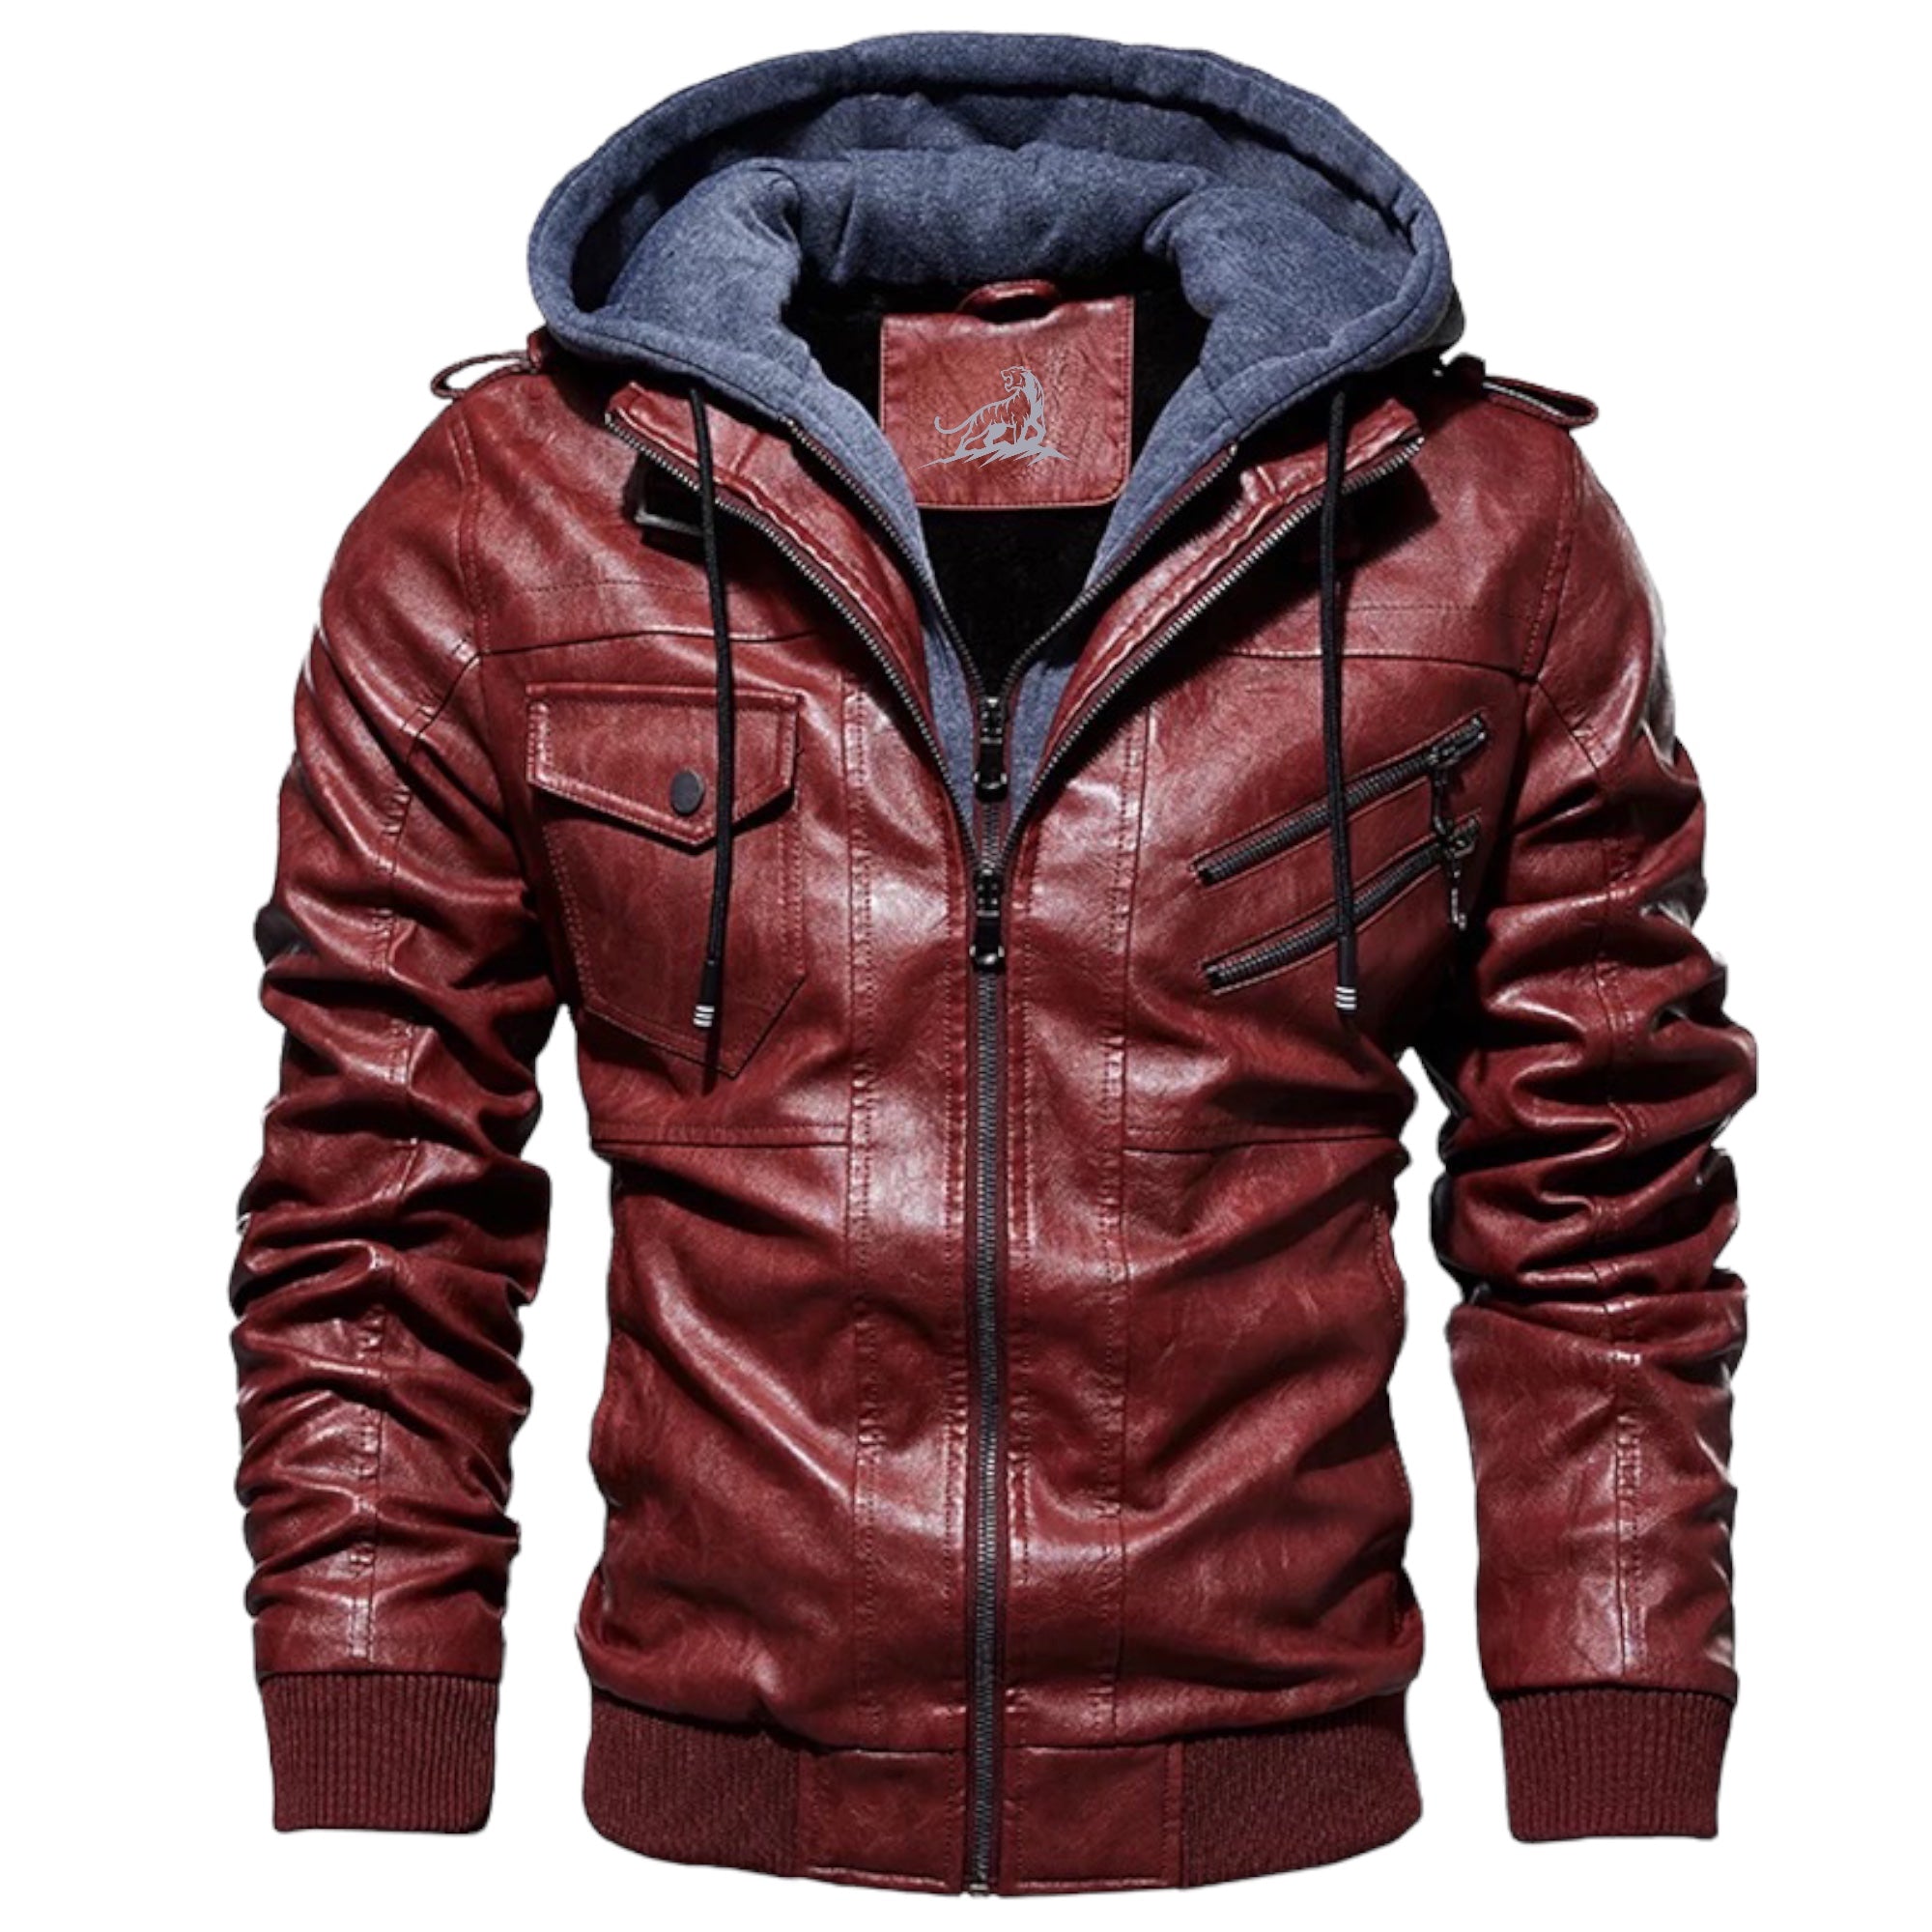 Men's Leather Jackets : Buy Online - Happy Gentleman - United States